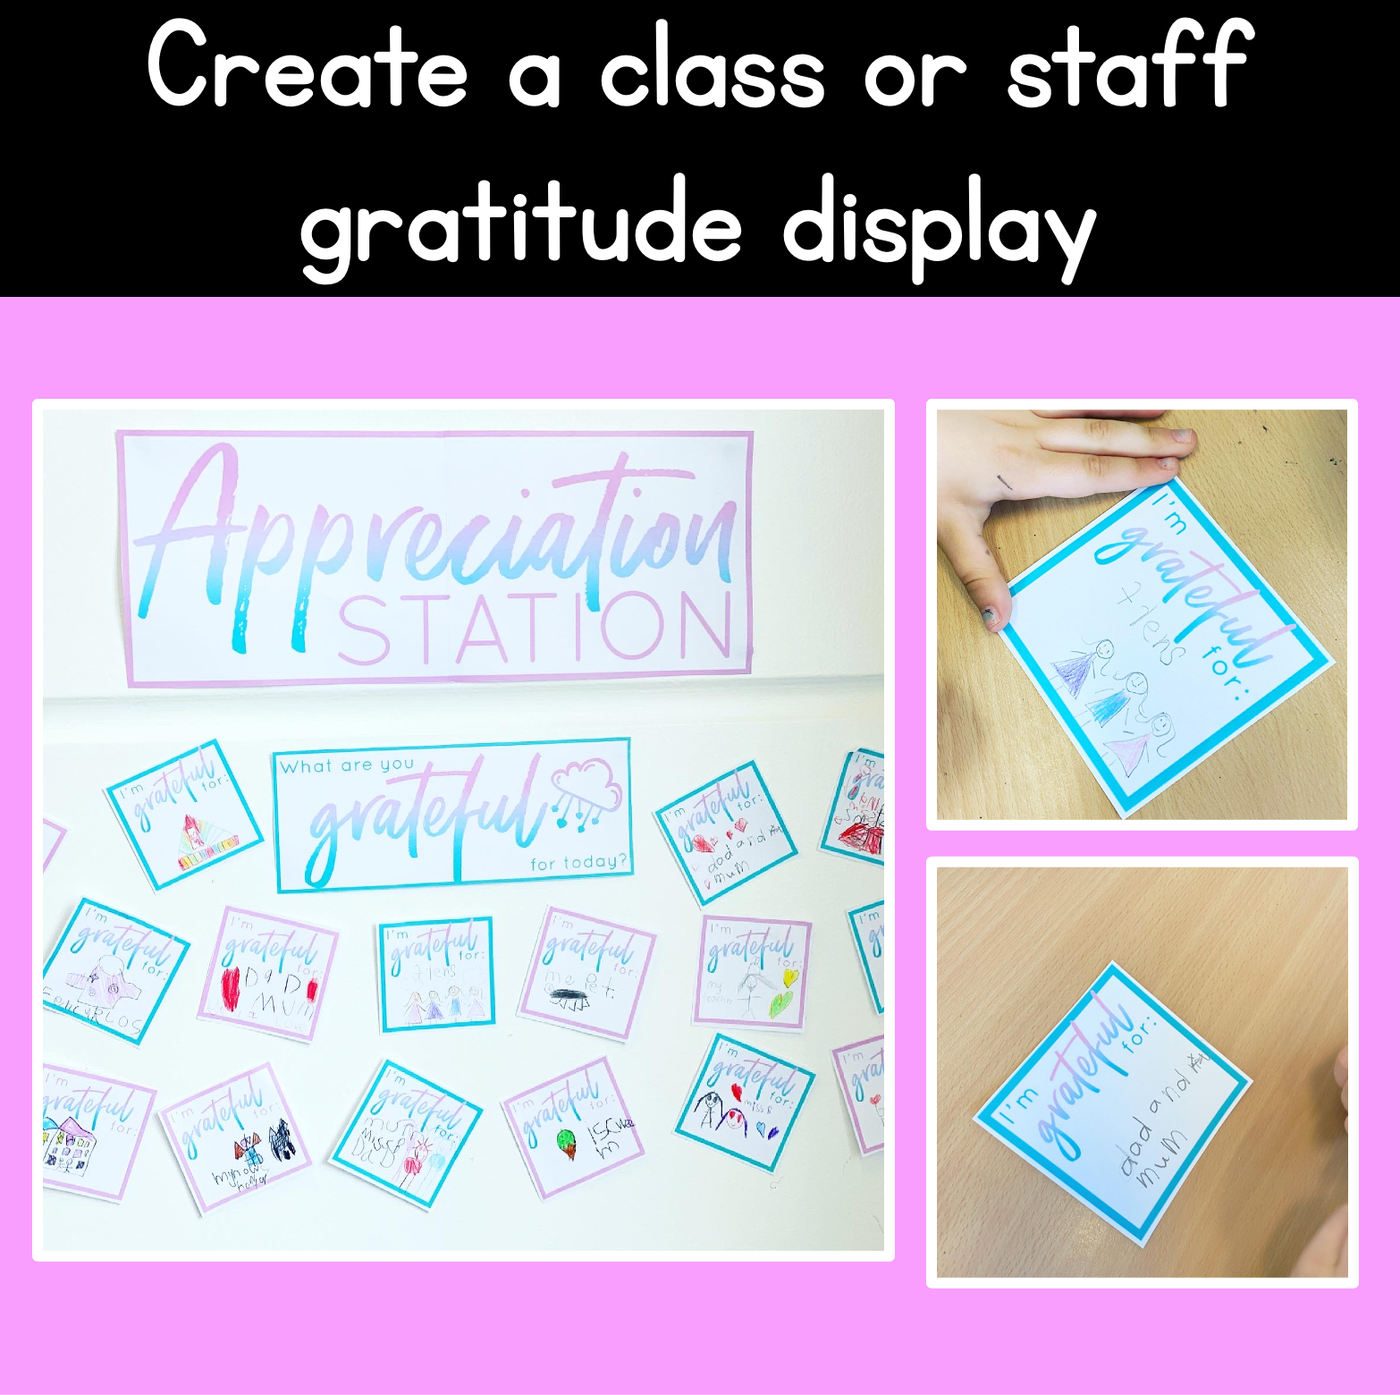 Appreciation Station - Classroom or Staffroom Gratitude Display